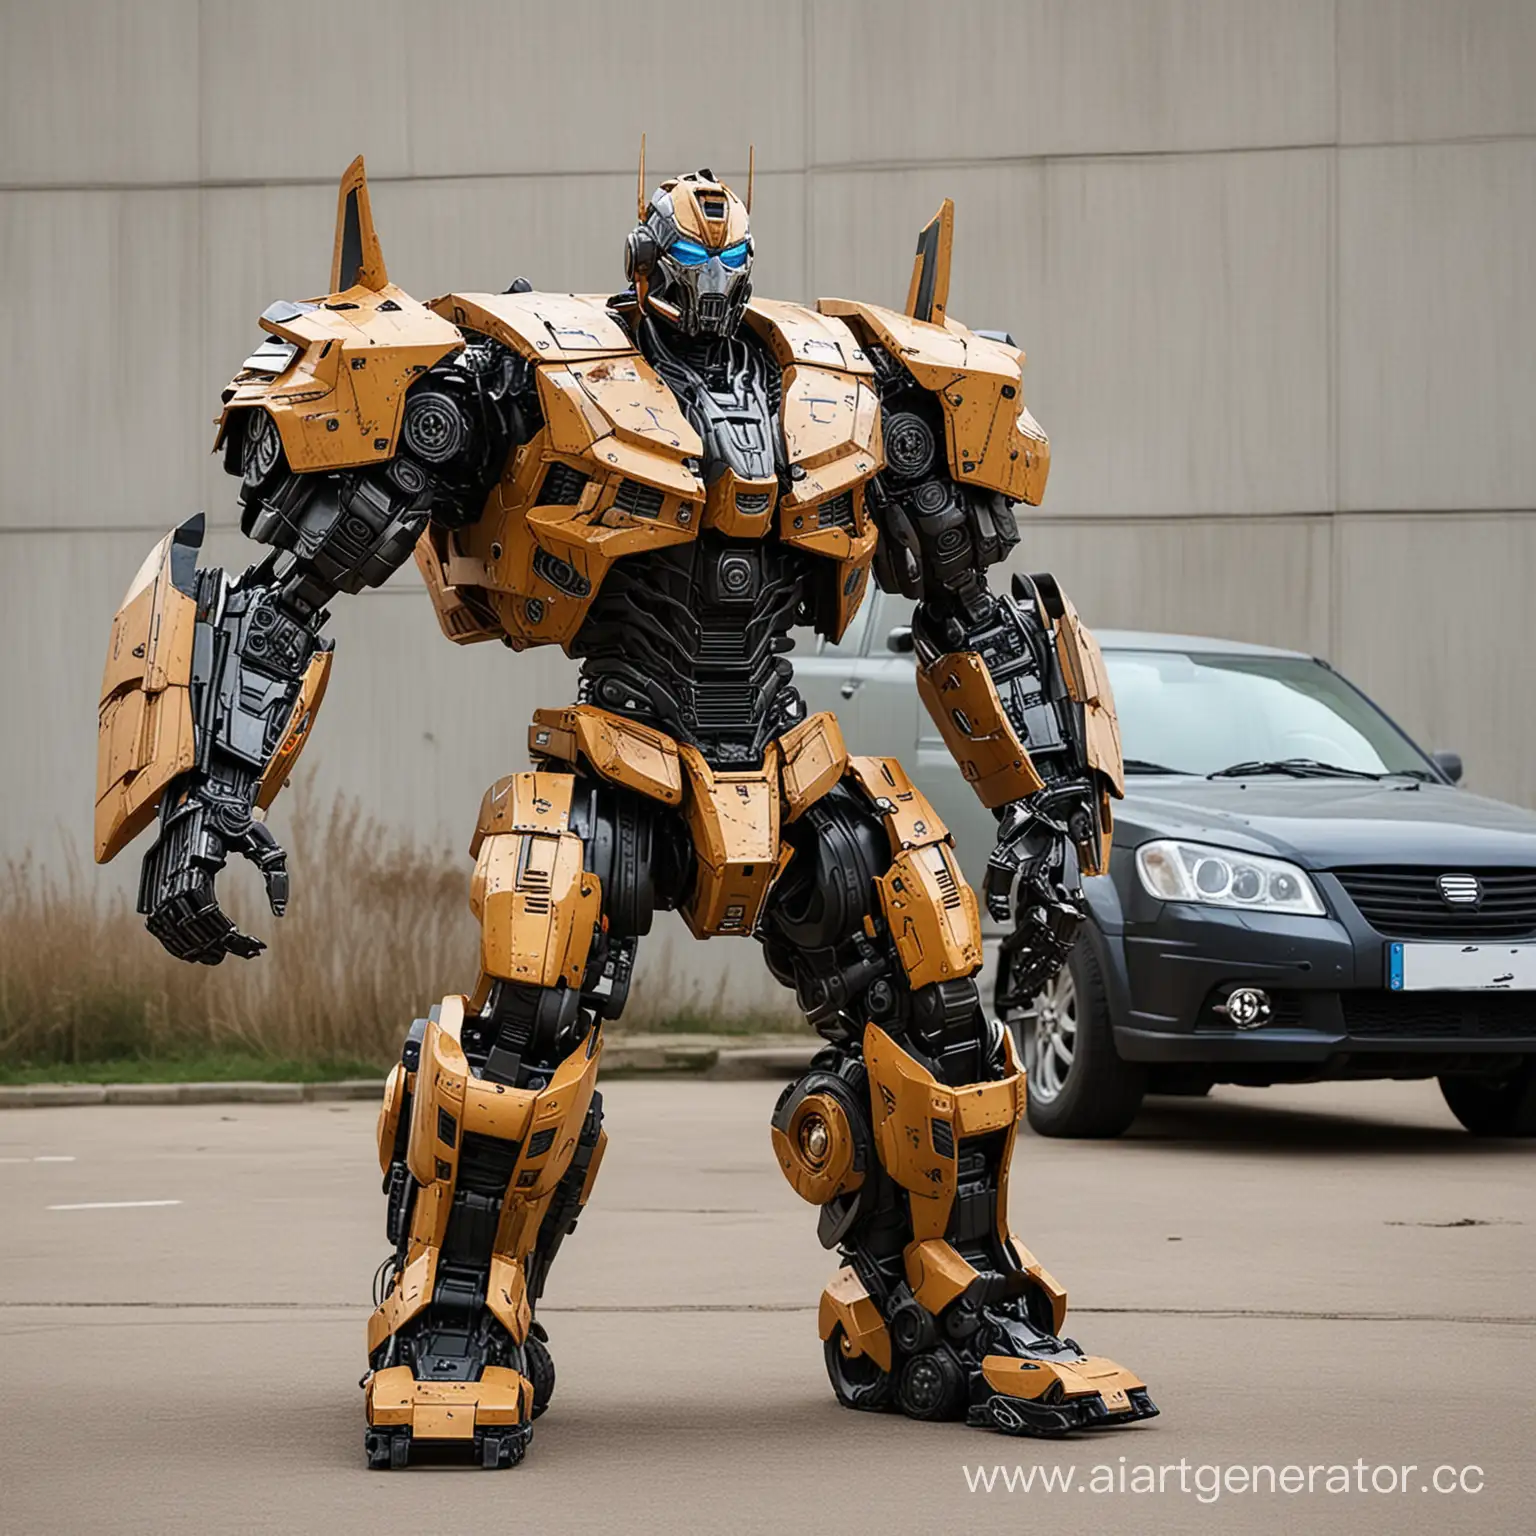 Lada-Largus-Transformer-Car-Morphing-into-Robot